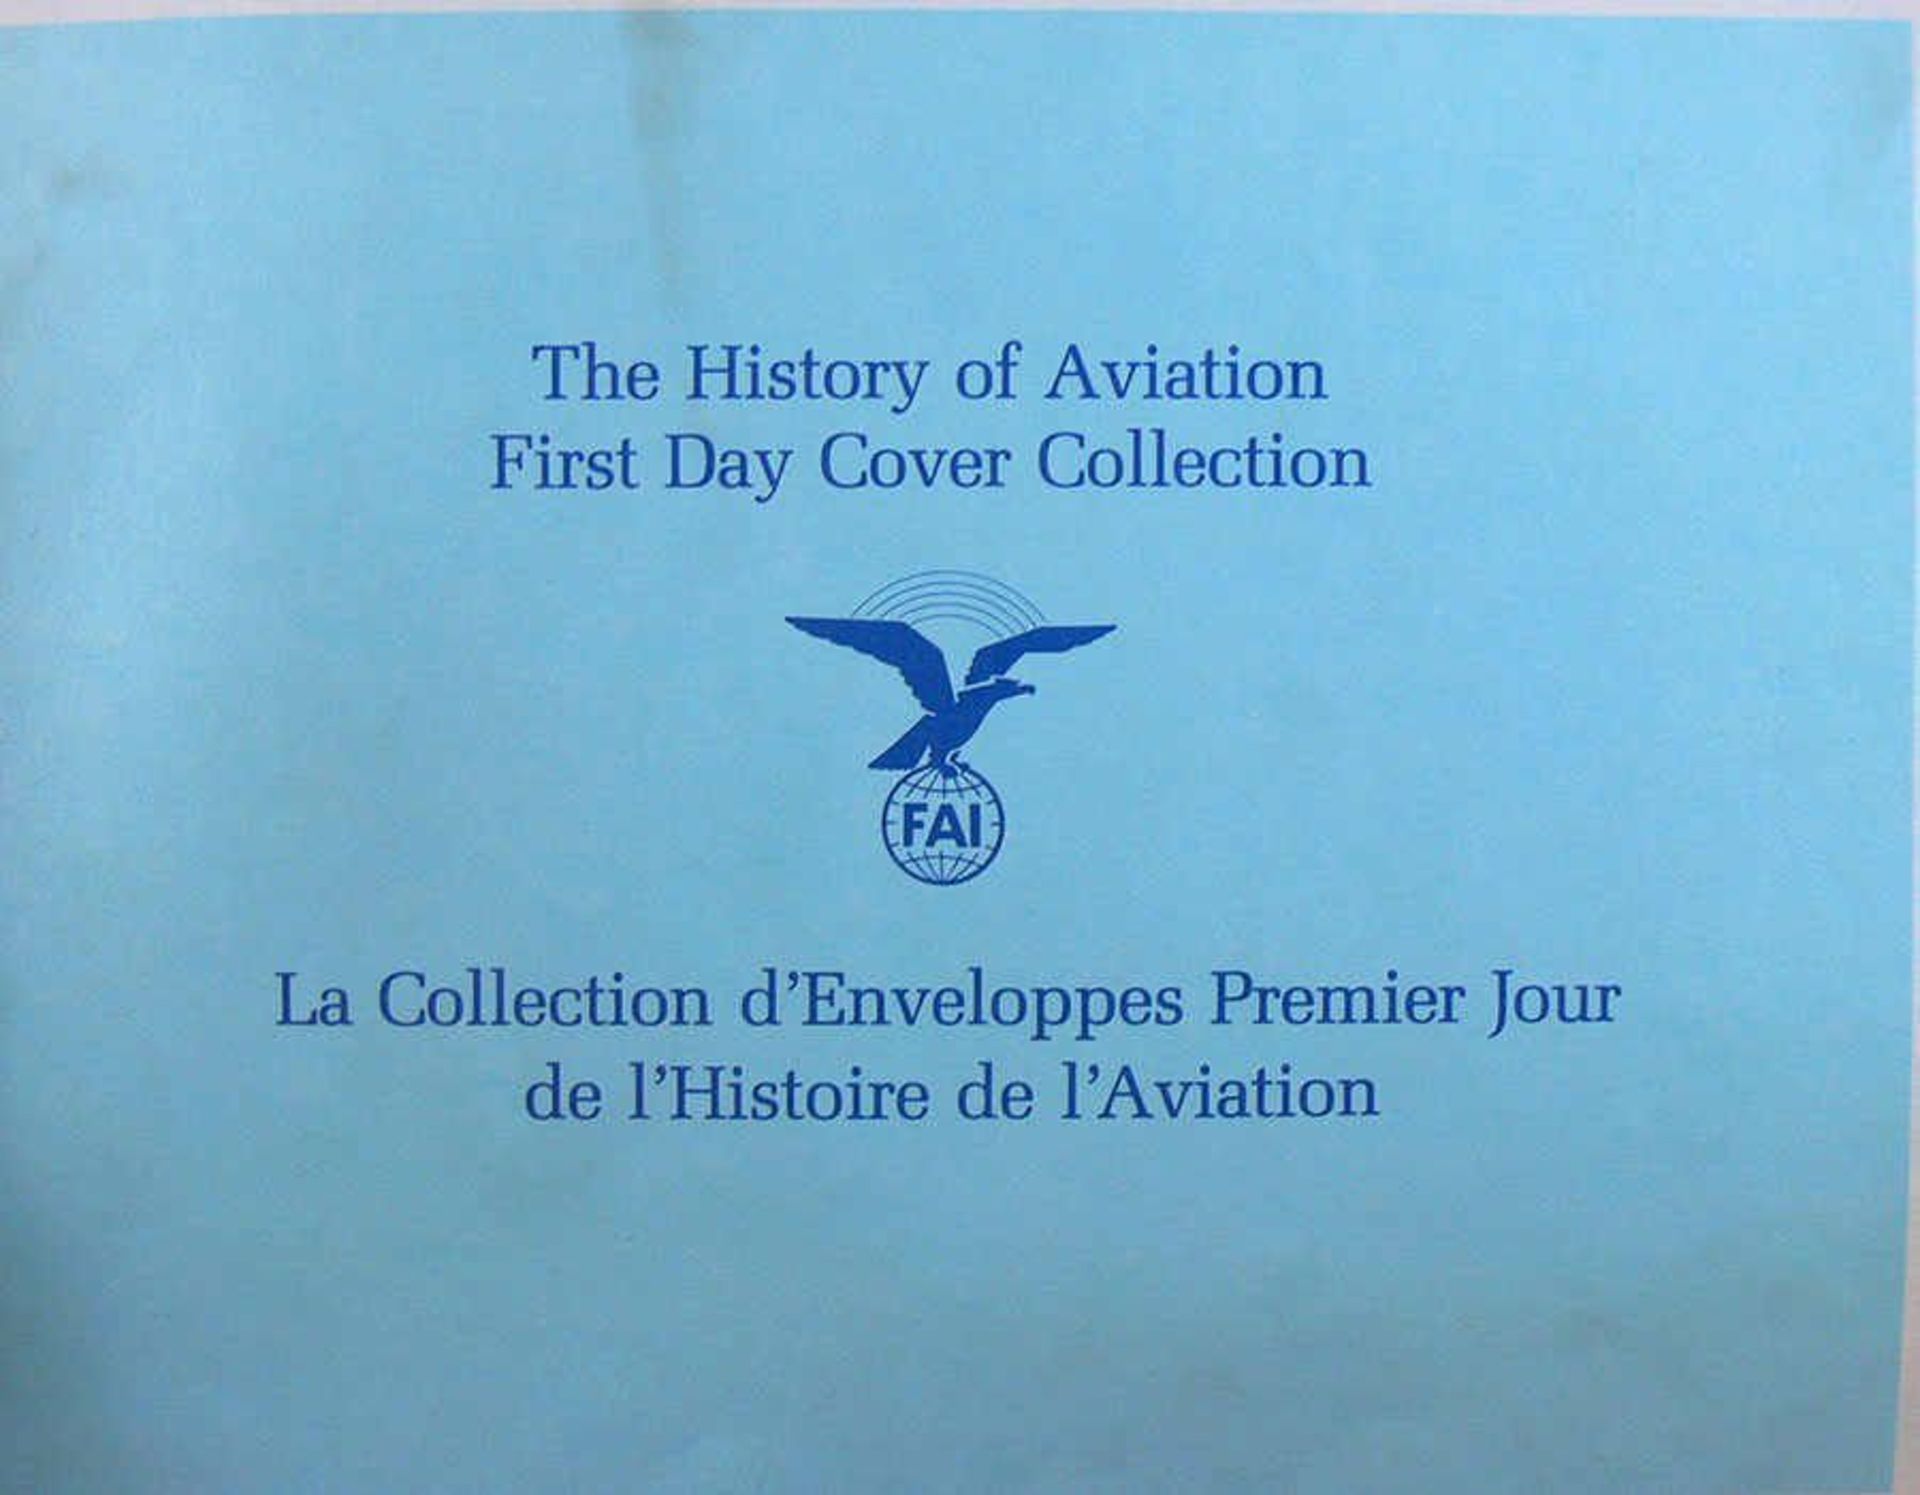 Sammlung Ersttagsbriefe "The History of Aviation - First Day Cover Collection". Bitte besichtigen.